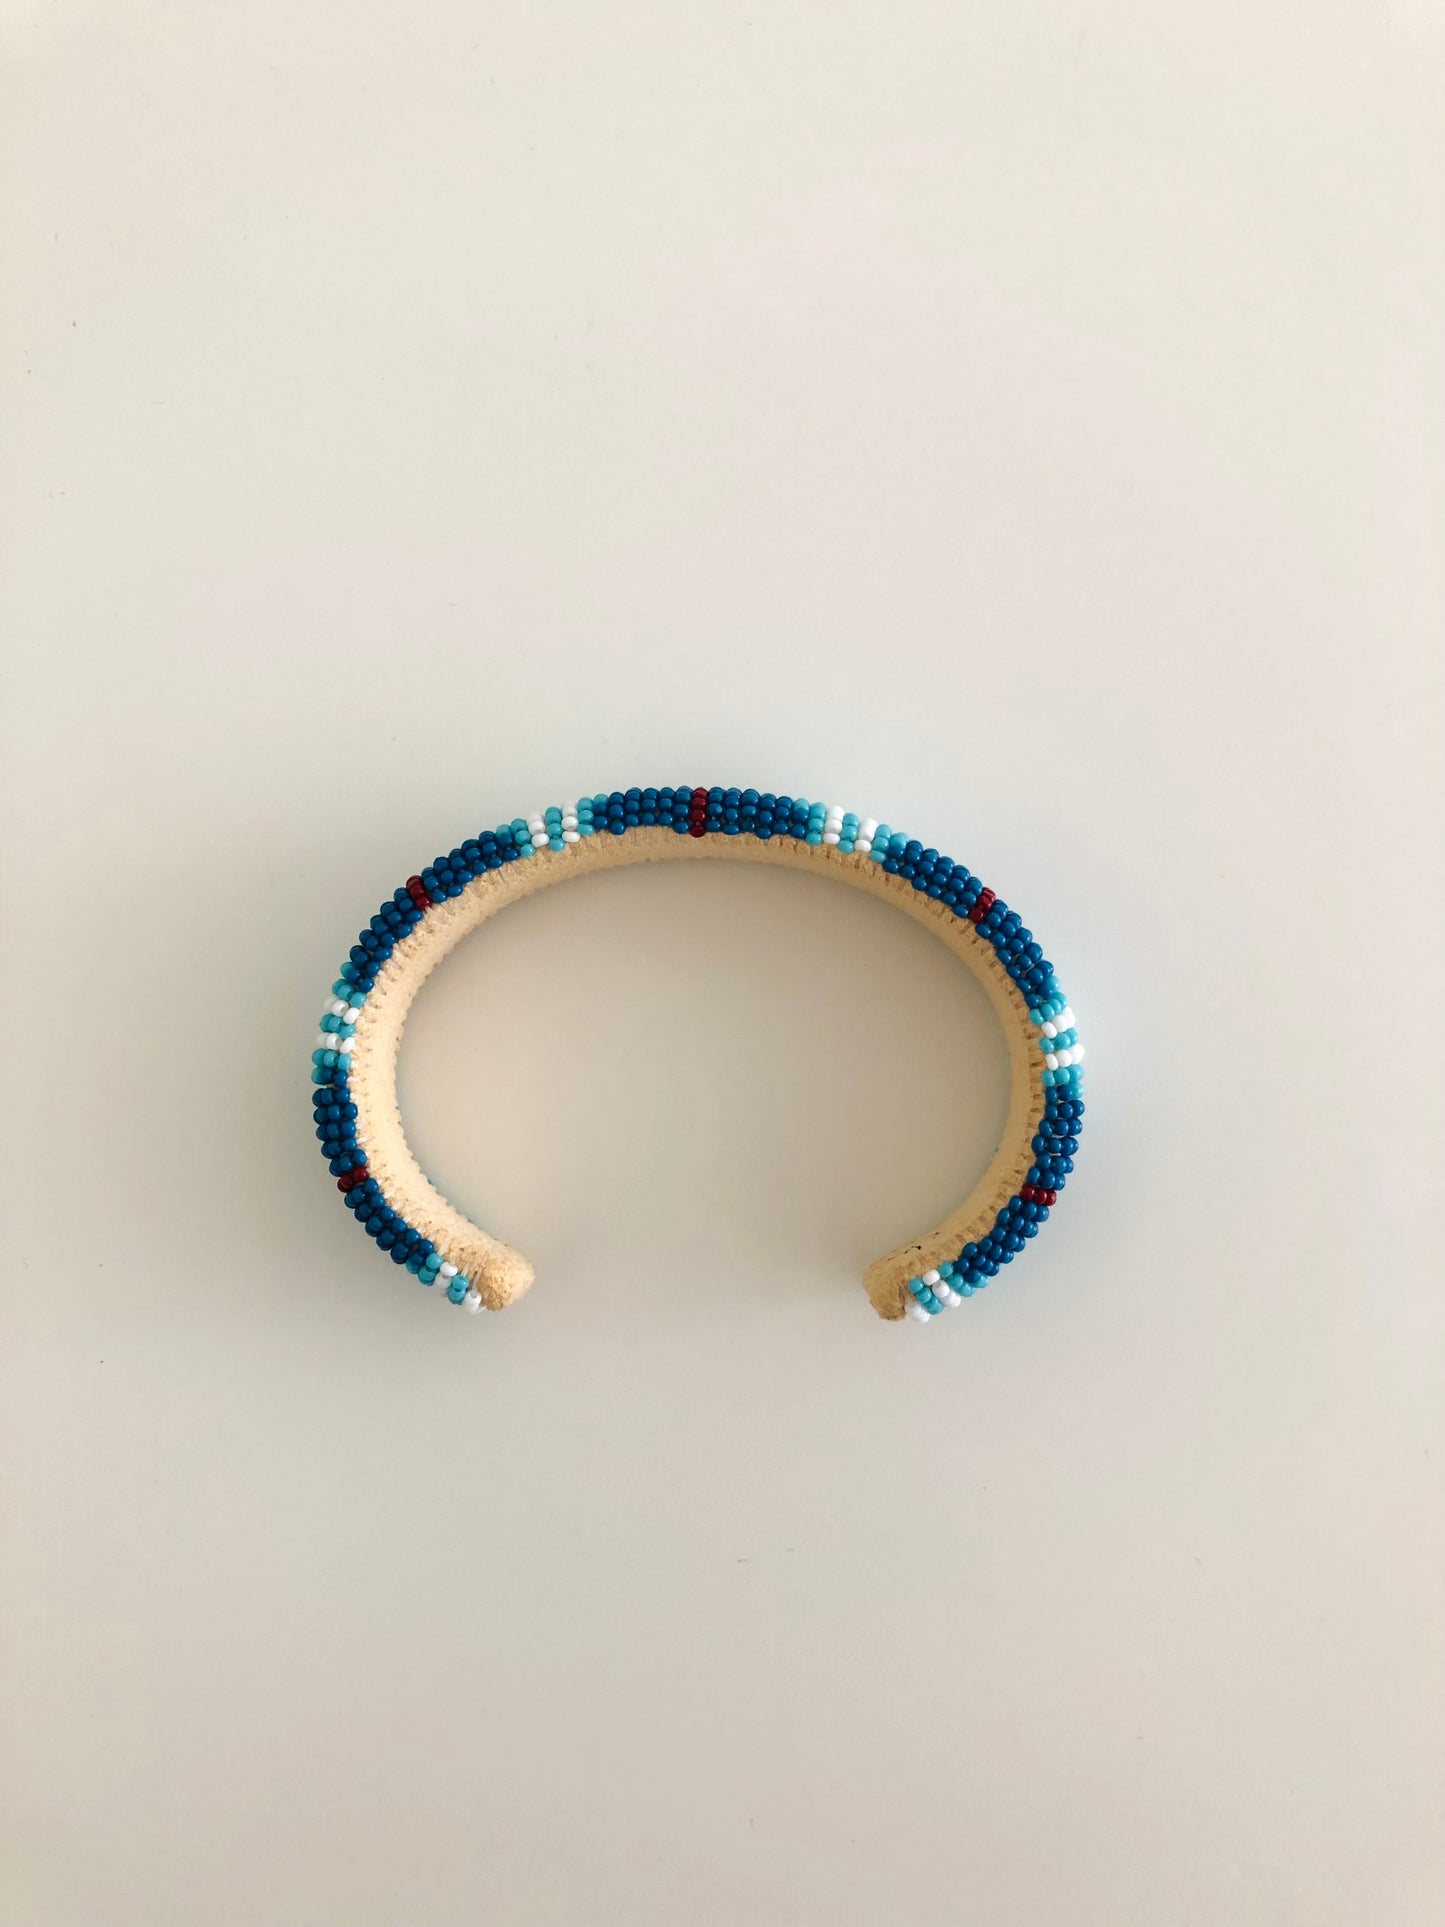 Beaded Cuff Bracelet - Turquoise Blue & Denim